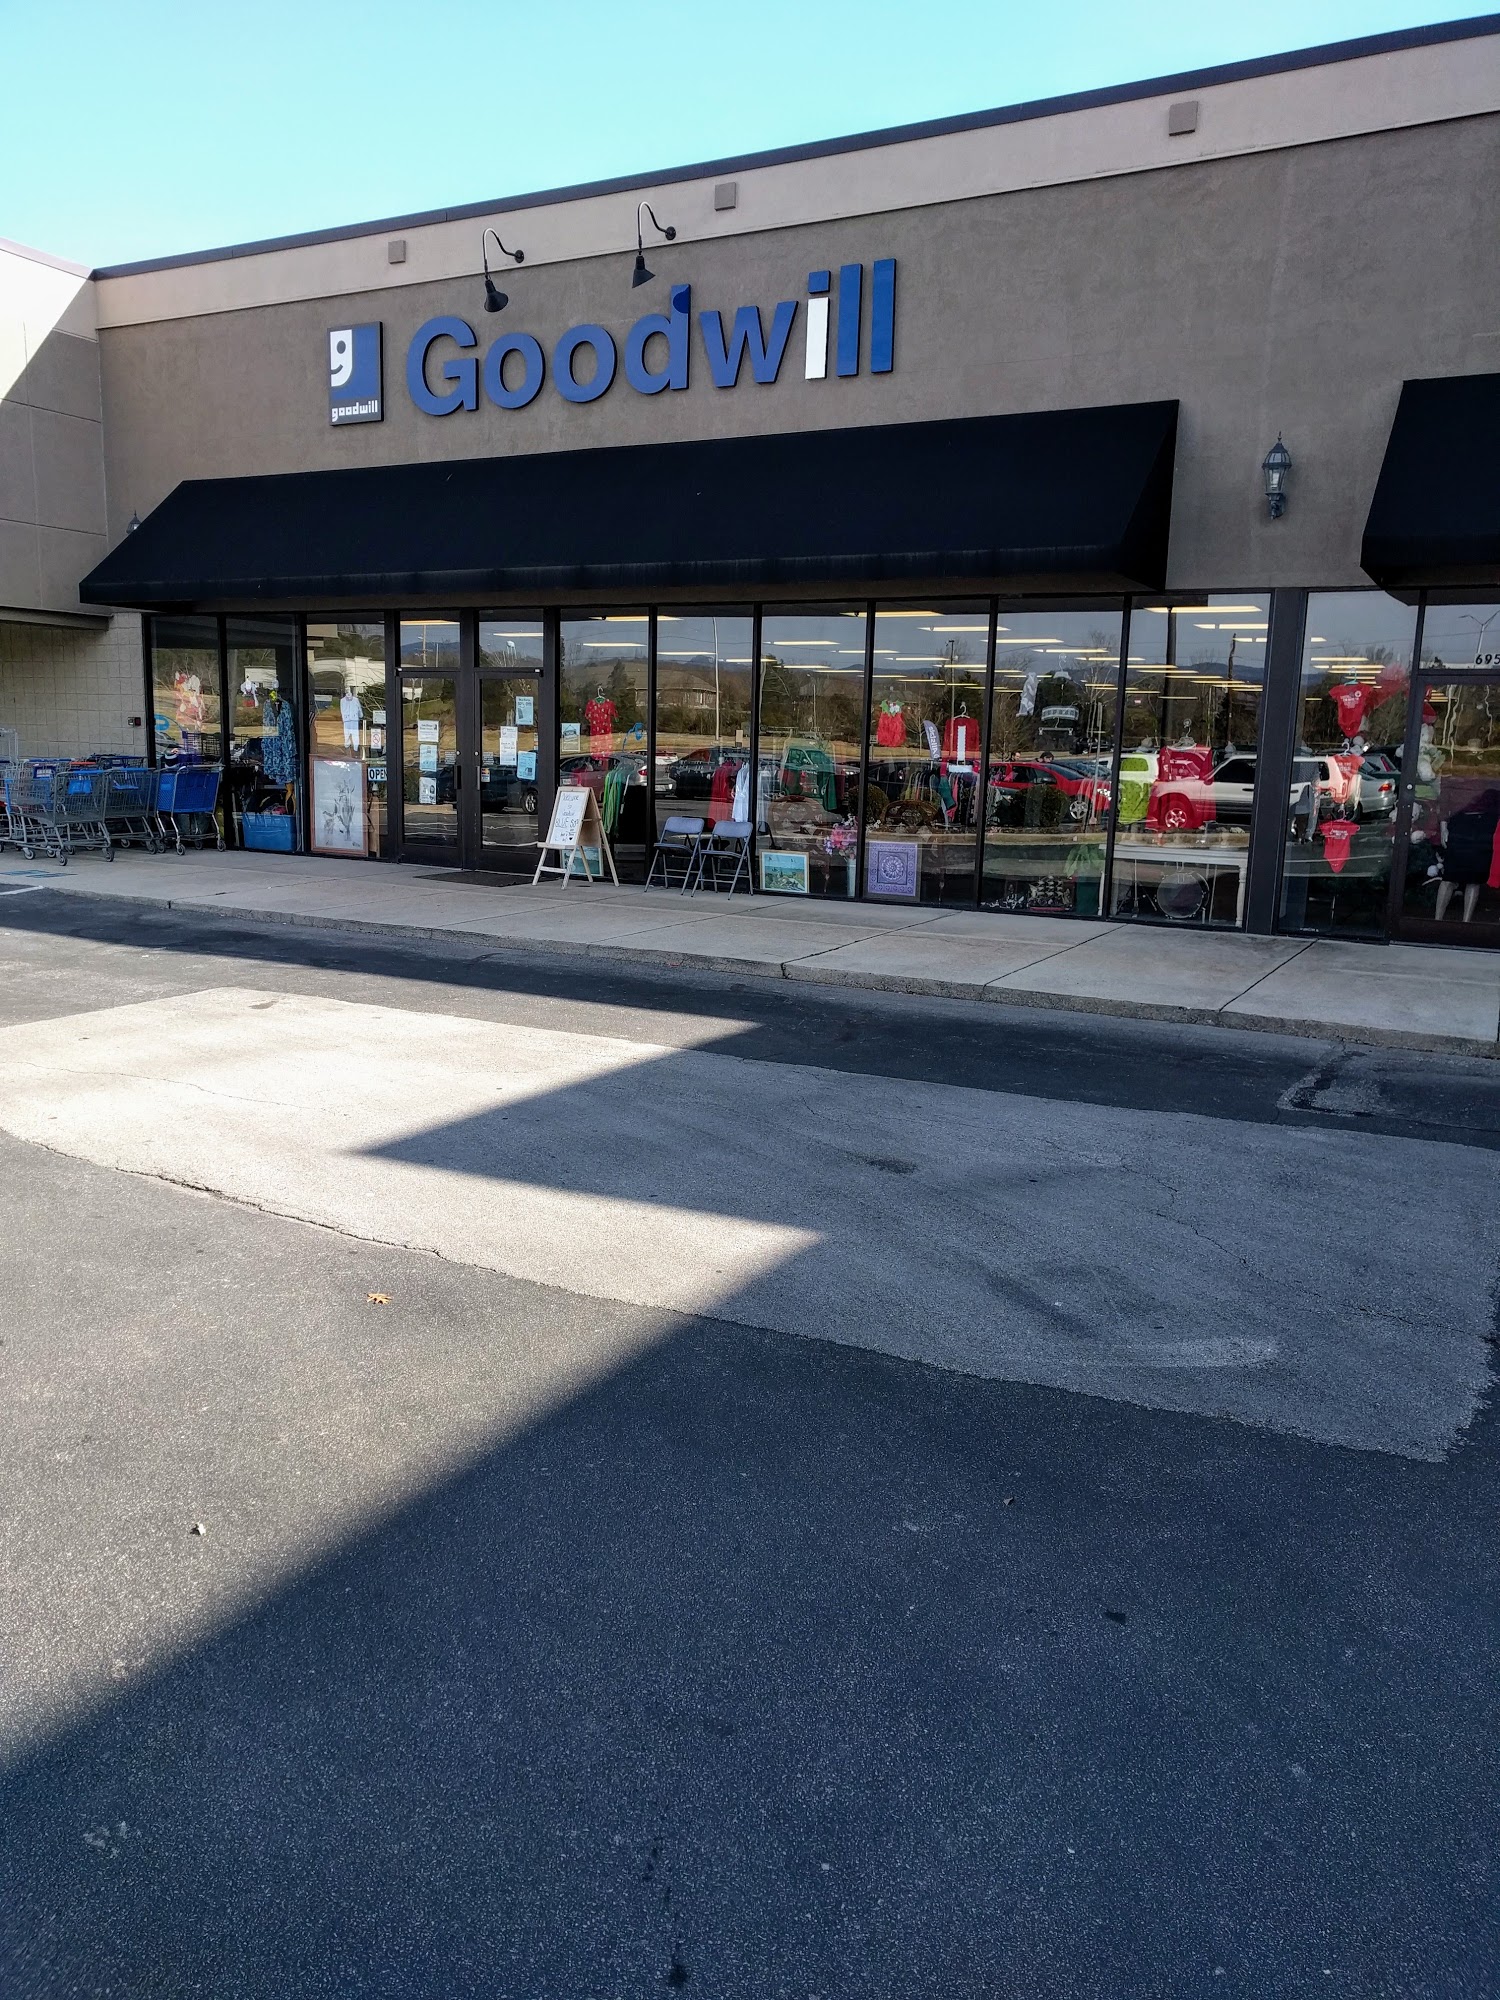 Goodwill Retail Store & Job Training Center